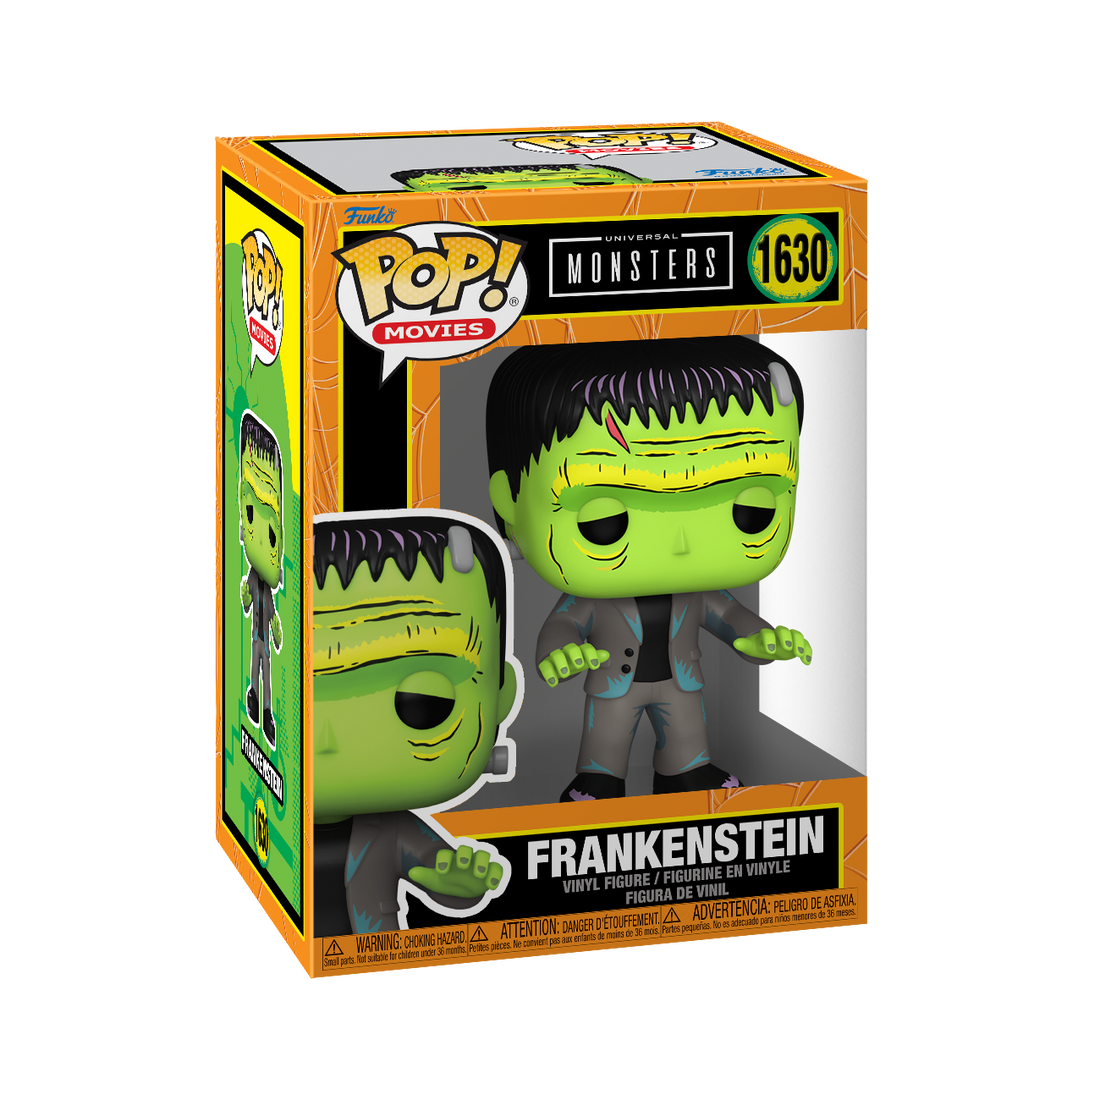 Funko Pop! Movies Universal Monsters 1630 Frankenstein Funko